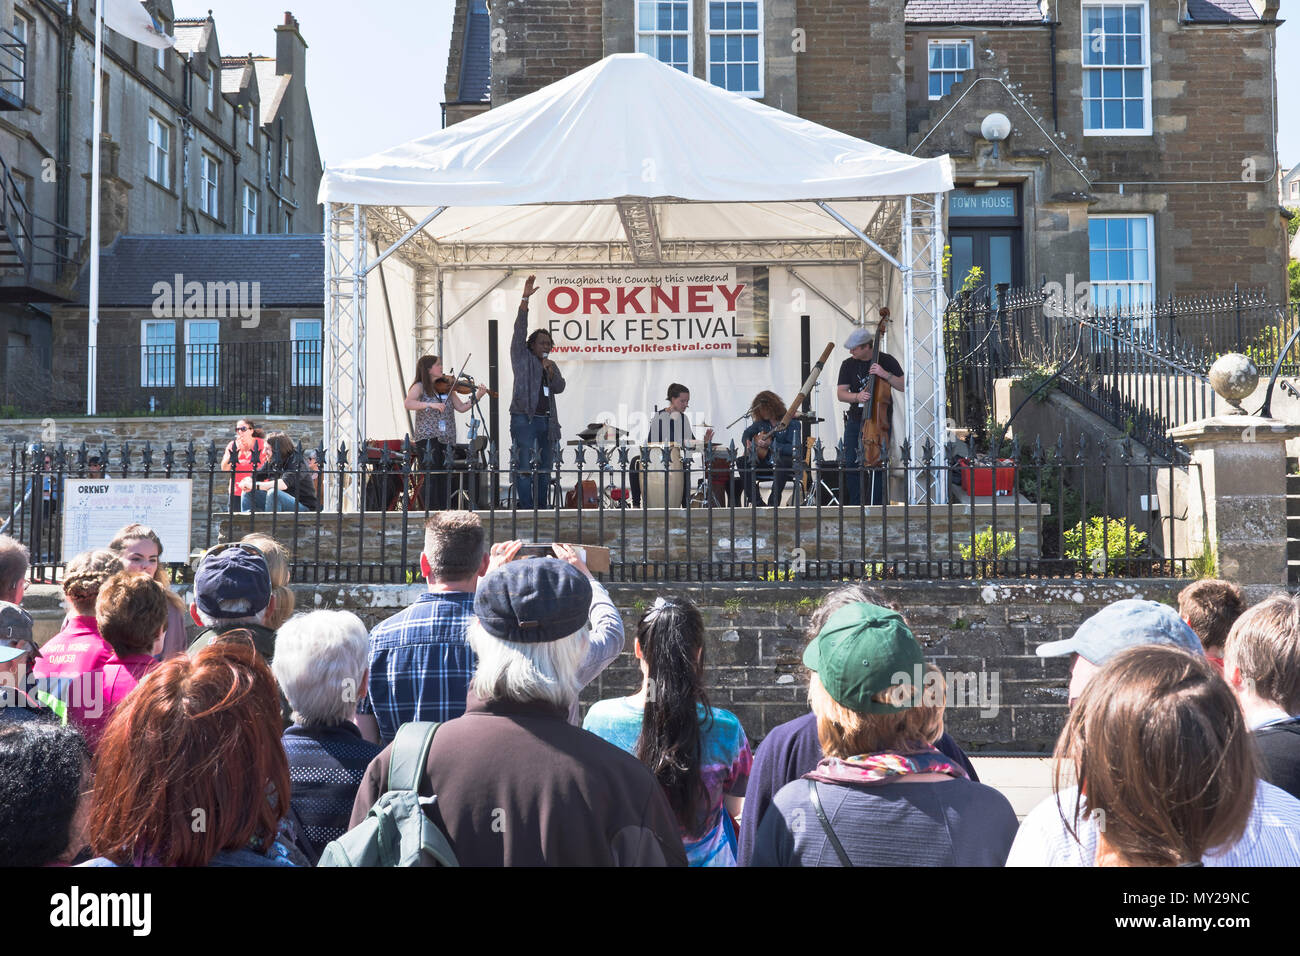 dh Stromness Folk Festival STROMNESS ORKNEY Música tradicional banda de música al aire libre calle multitud gente festivales escoceses músicos escocia reino unido Foto de stock